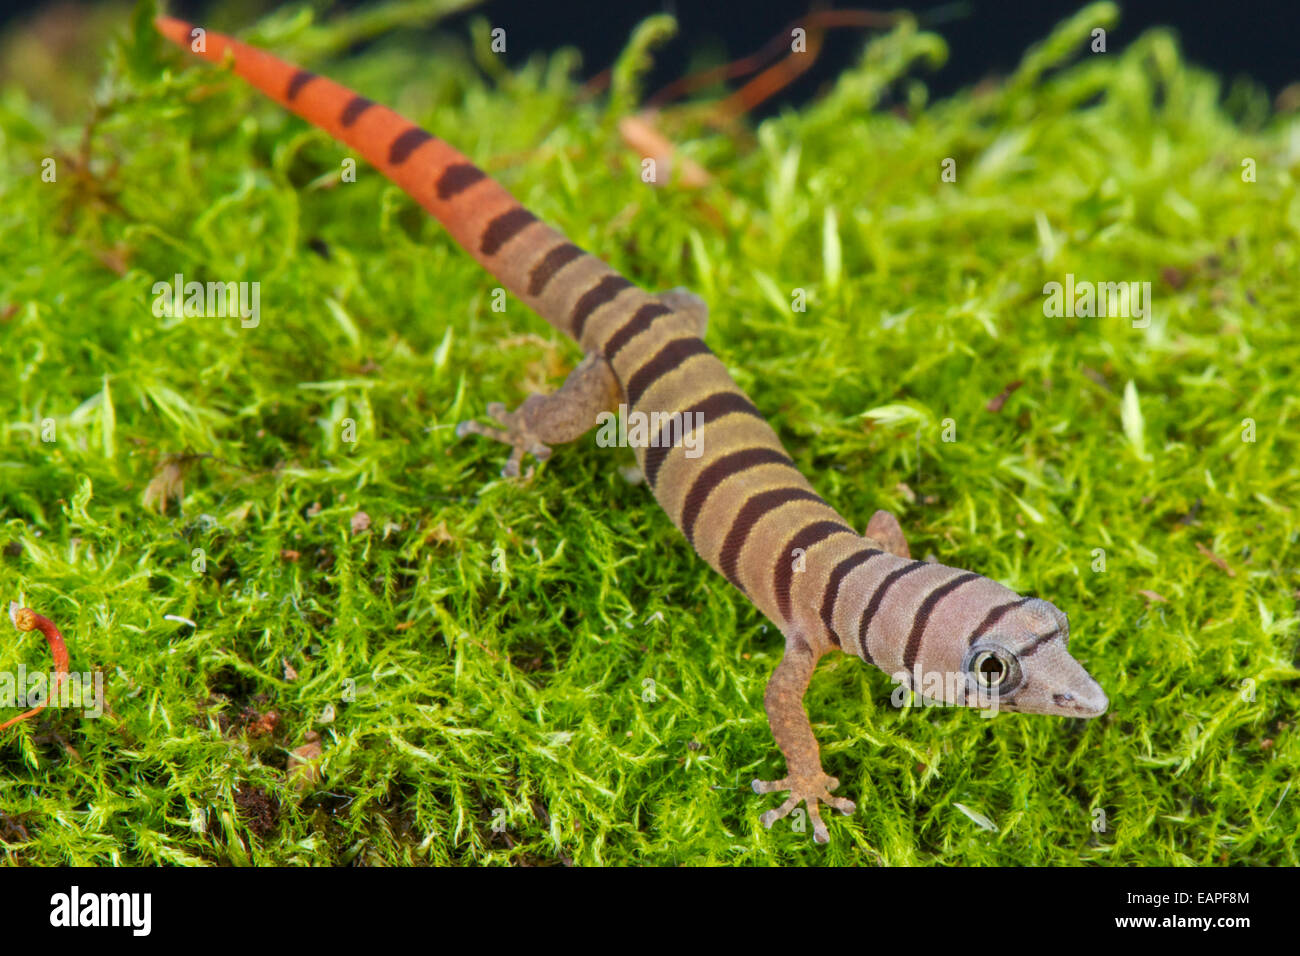 Gecko ceniciento / Sphaerodactylus elegans Foto de stock